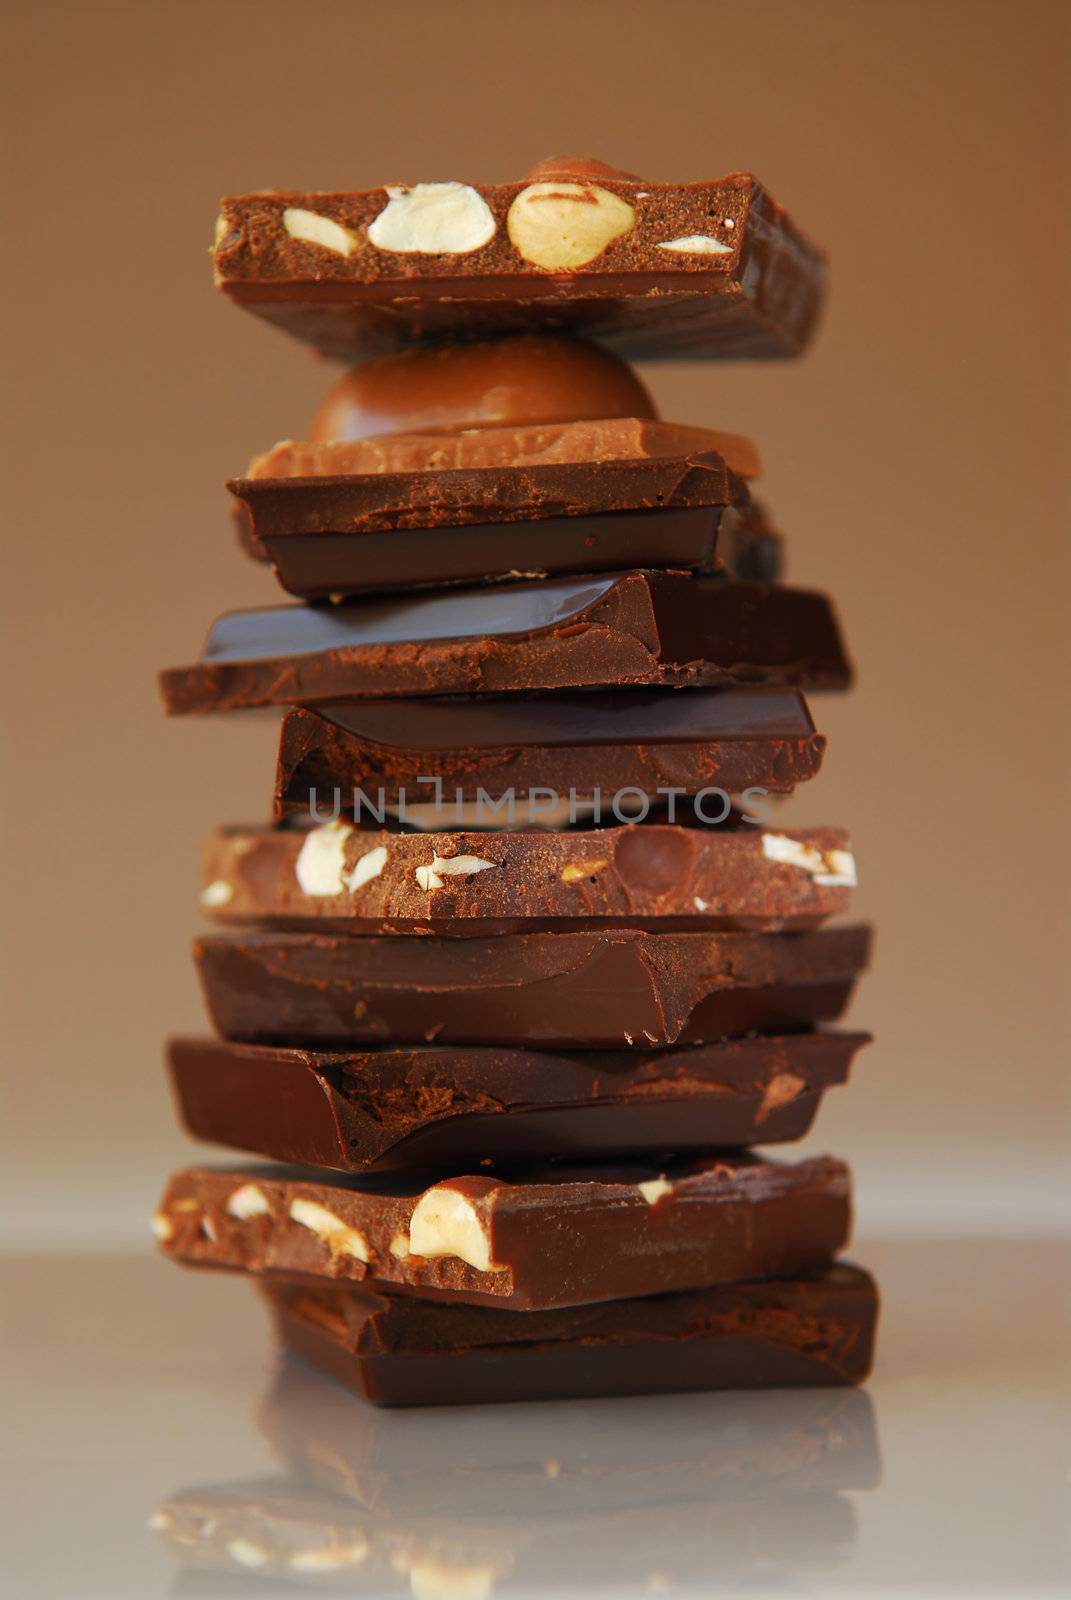 Chocolate by elenathewise